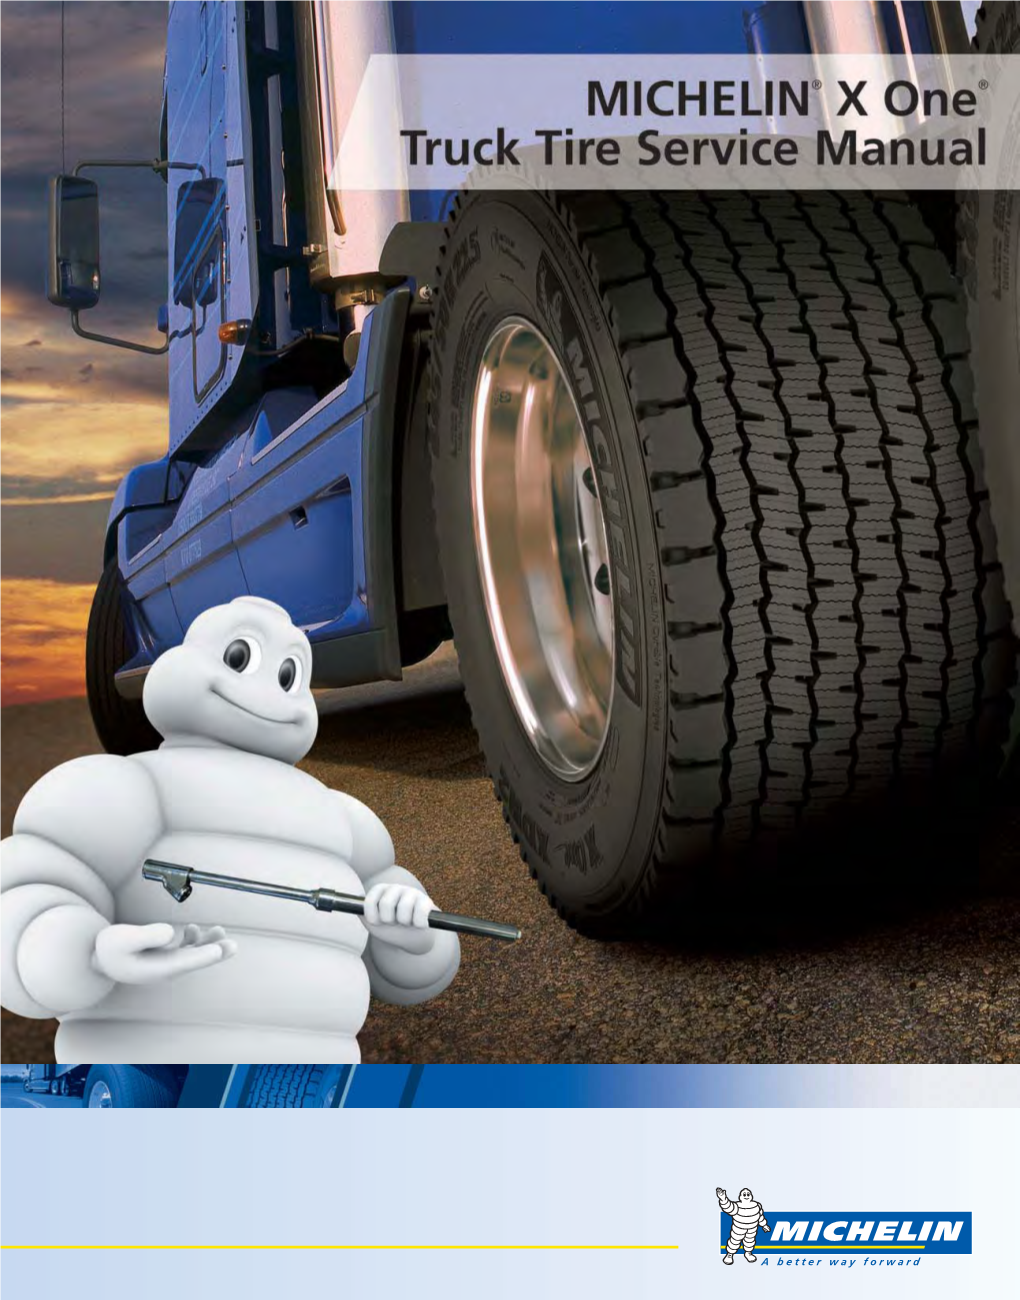 MICHELIN X One Truck Tire Service Manual